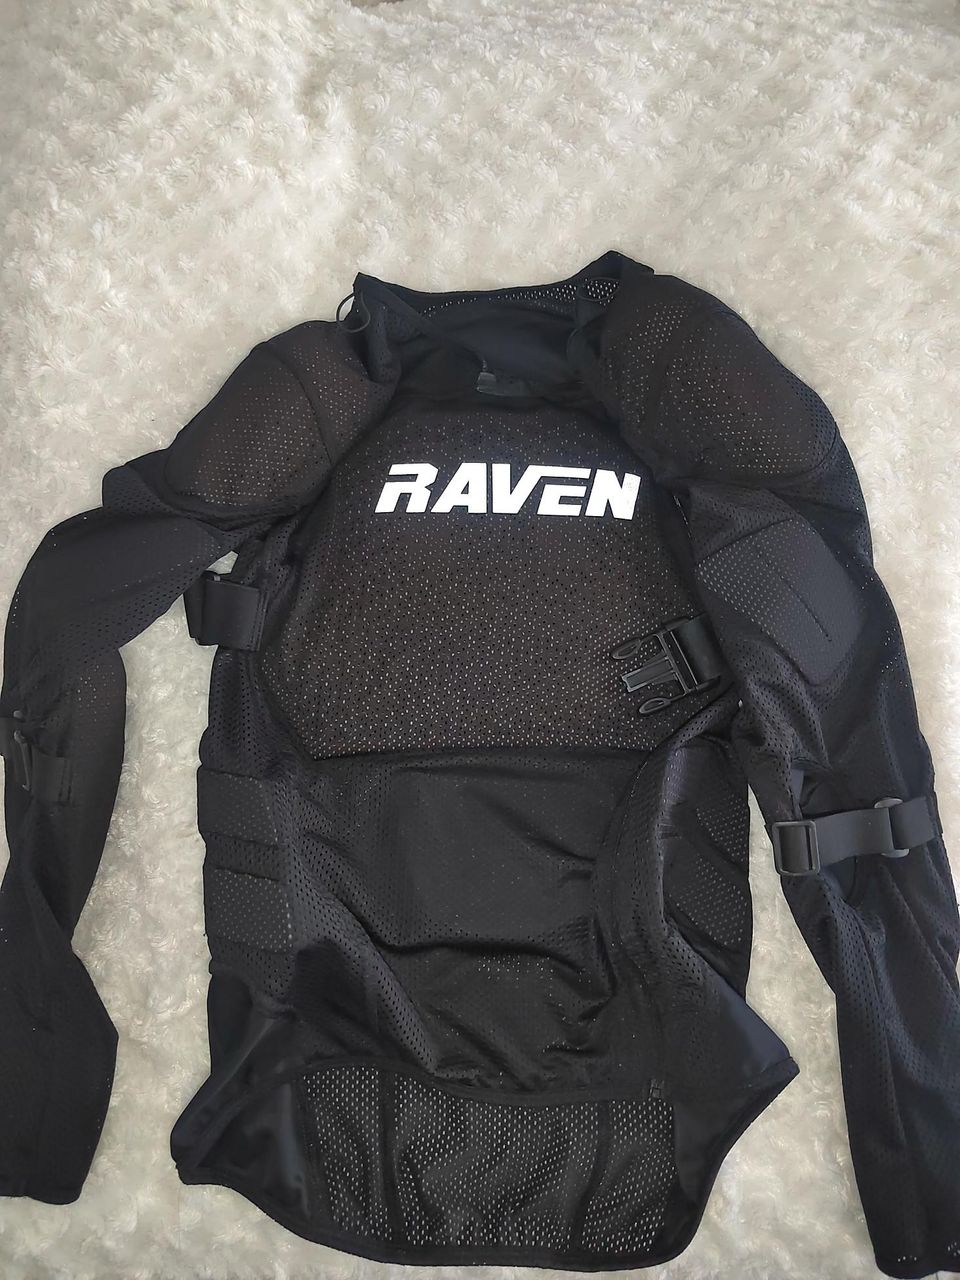 Suojatakki Raven Soft Shield M-koossa